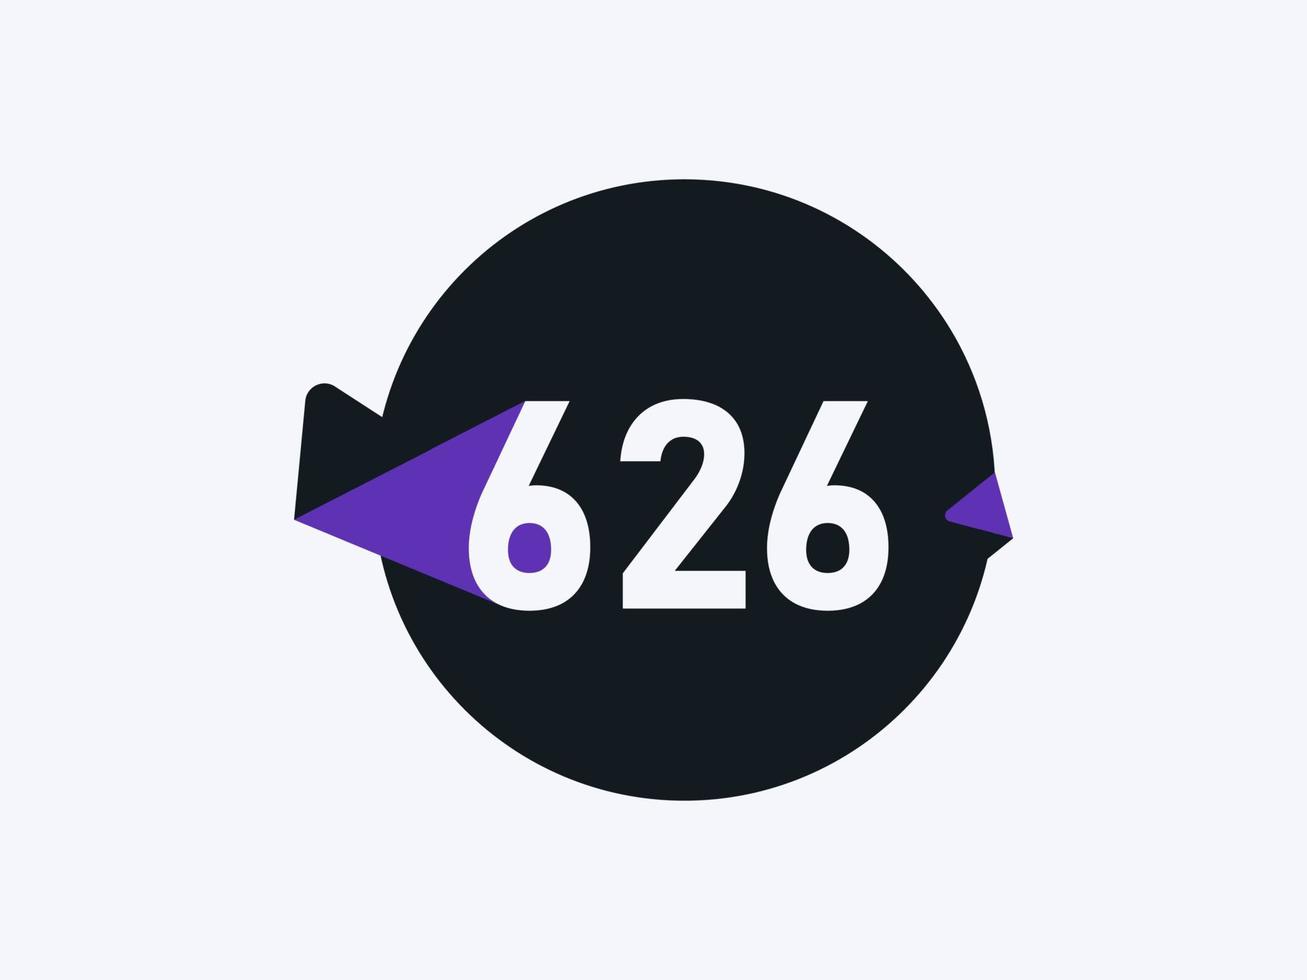 626 Number logo icon design vector image. Number logo icon design vector image